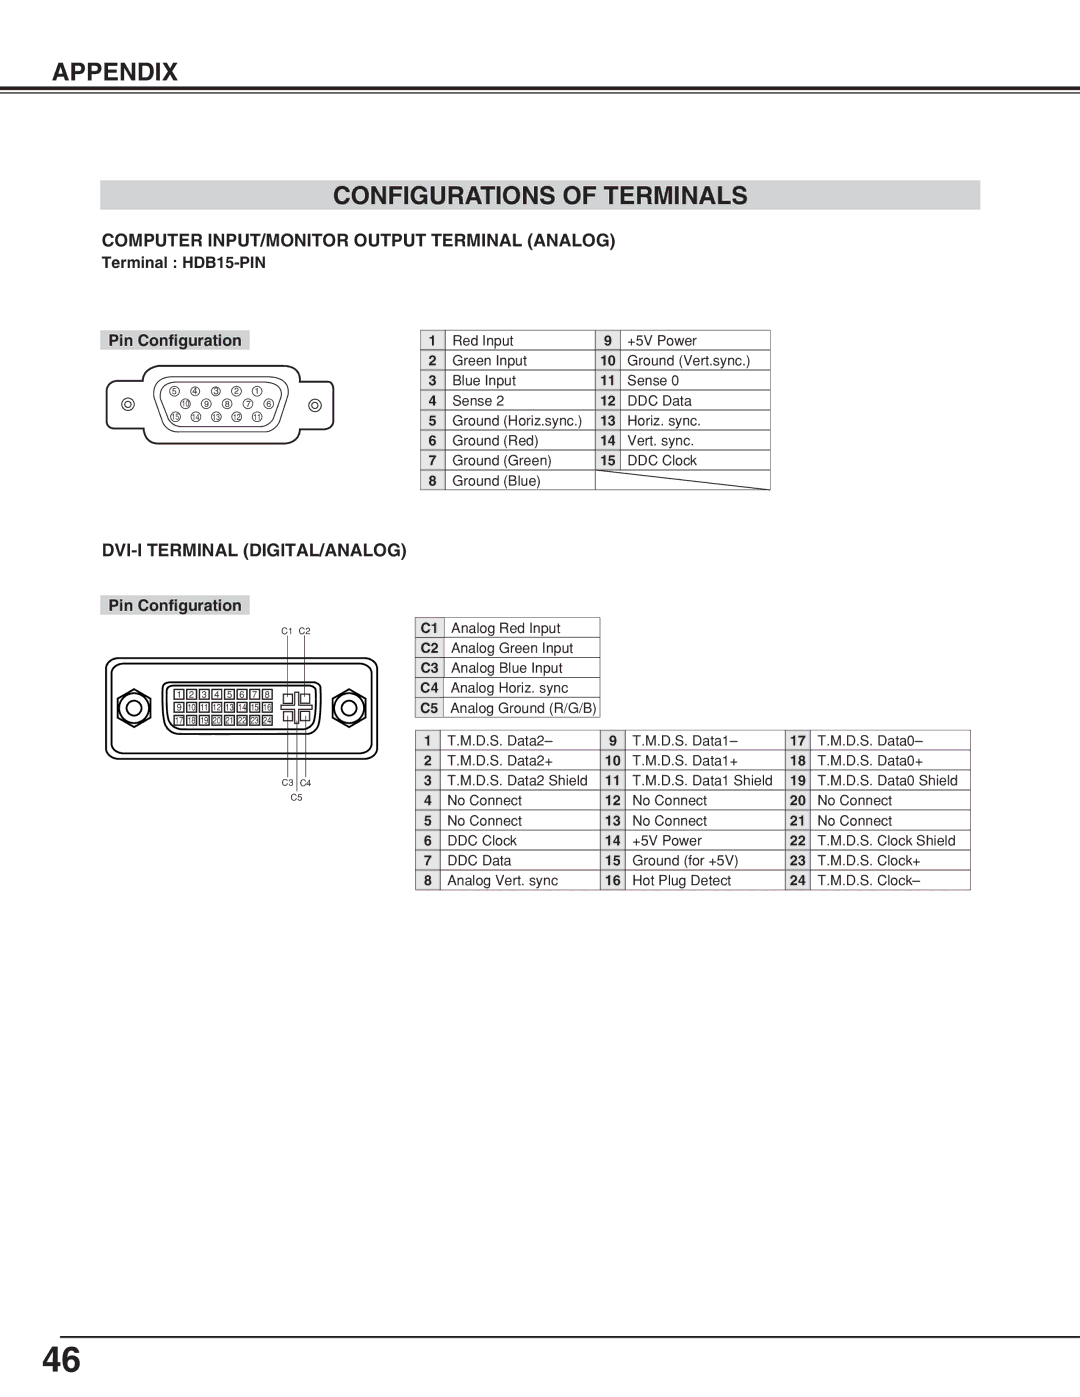 BOXLIGHT CP-320t manual Appendix Configurations of Terminals, Computer INPUT/MONITOR Output Terminal Analog 